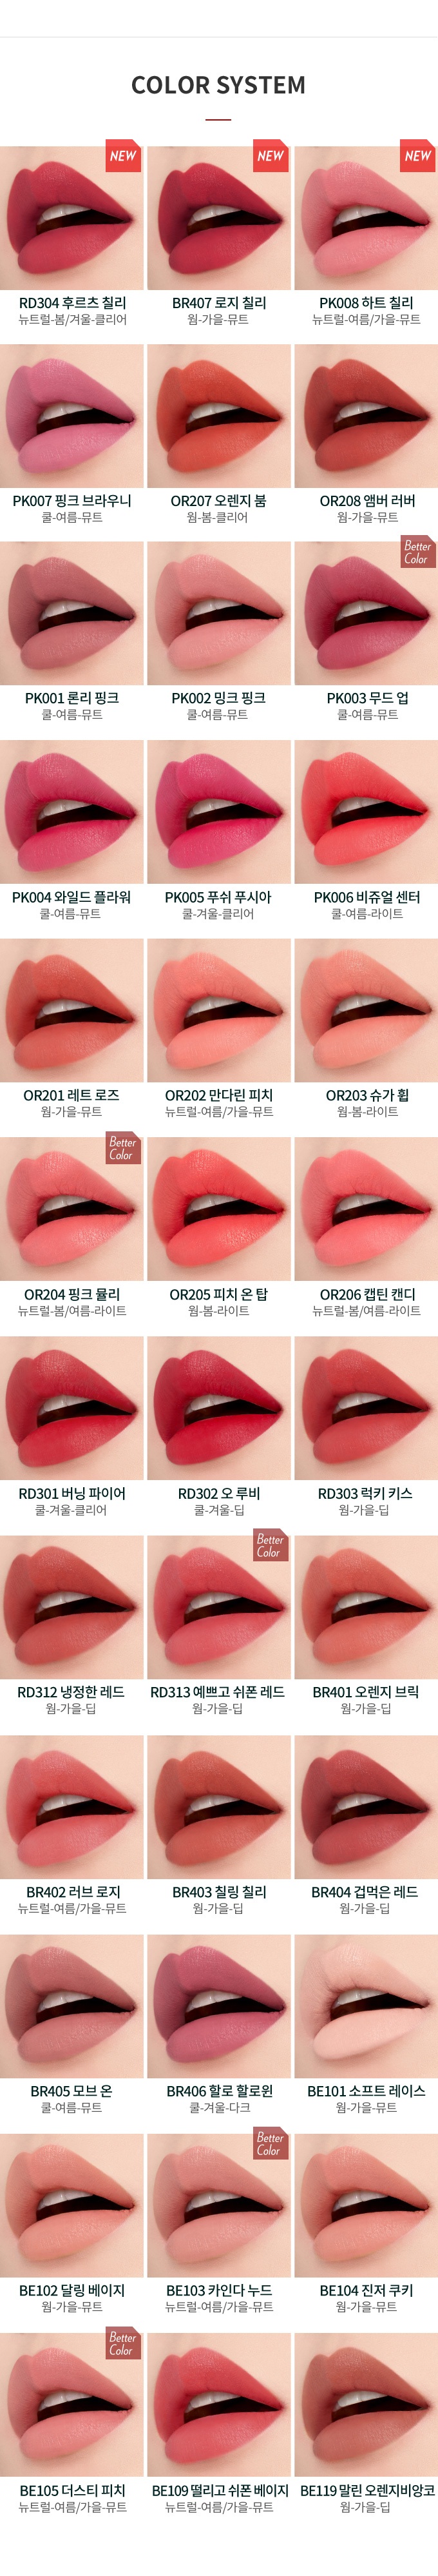 Etude House Better Lips Talk Velvet korean skincare product online shop malaysia China taiwan3